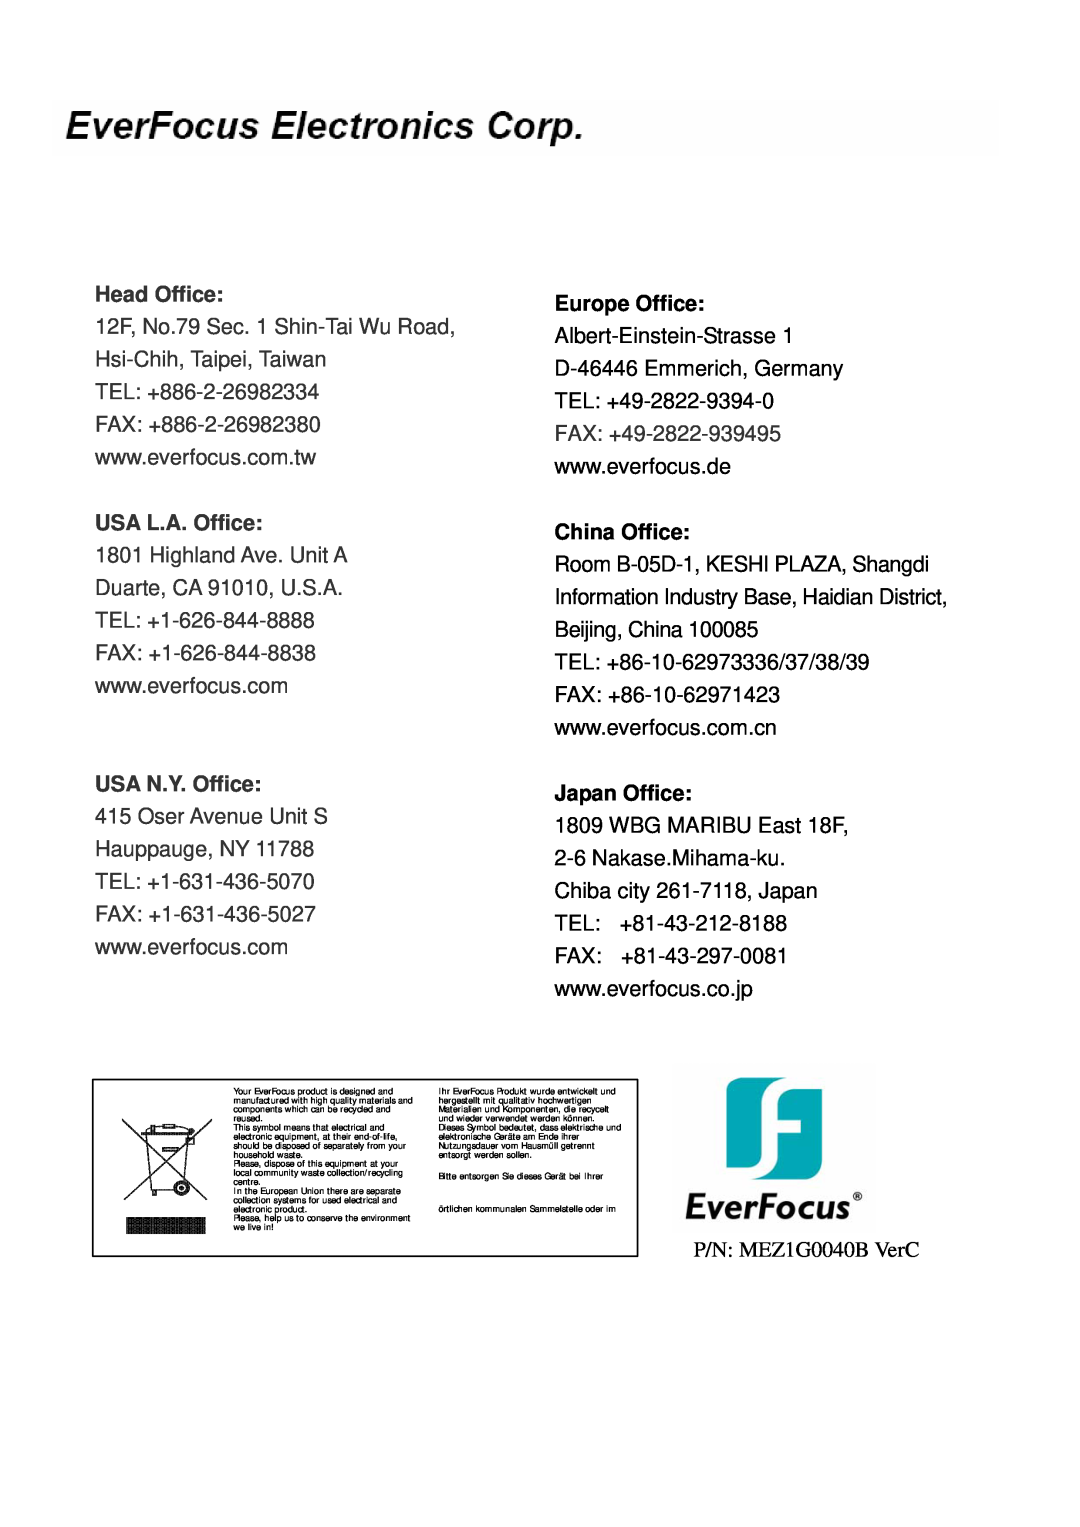 EverFocus EZ180 user manual Head Office, 12F, No.79 Sec. 1 Shin-Tai Wu Road, Hsi-Chih, Taipei, Taiwan, TEL +886-2-26982334 